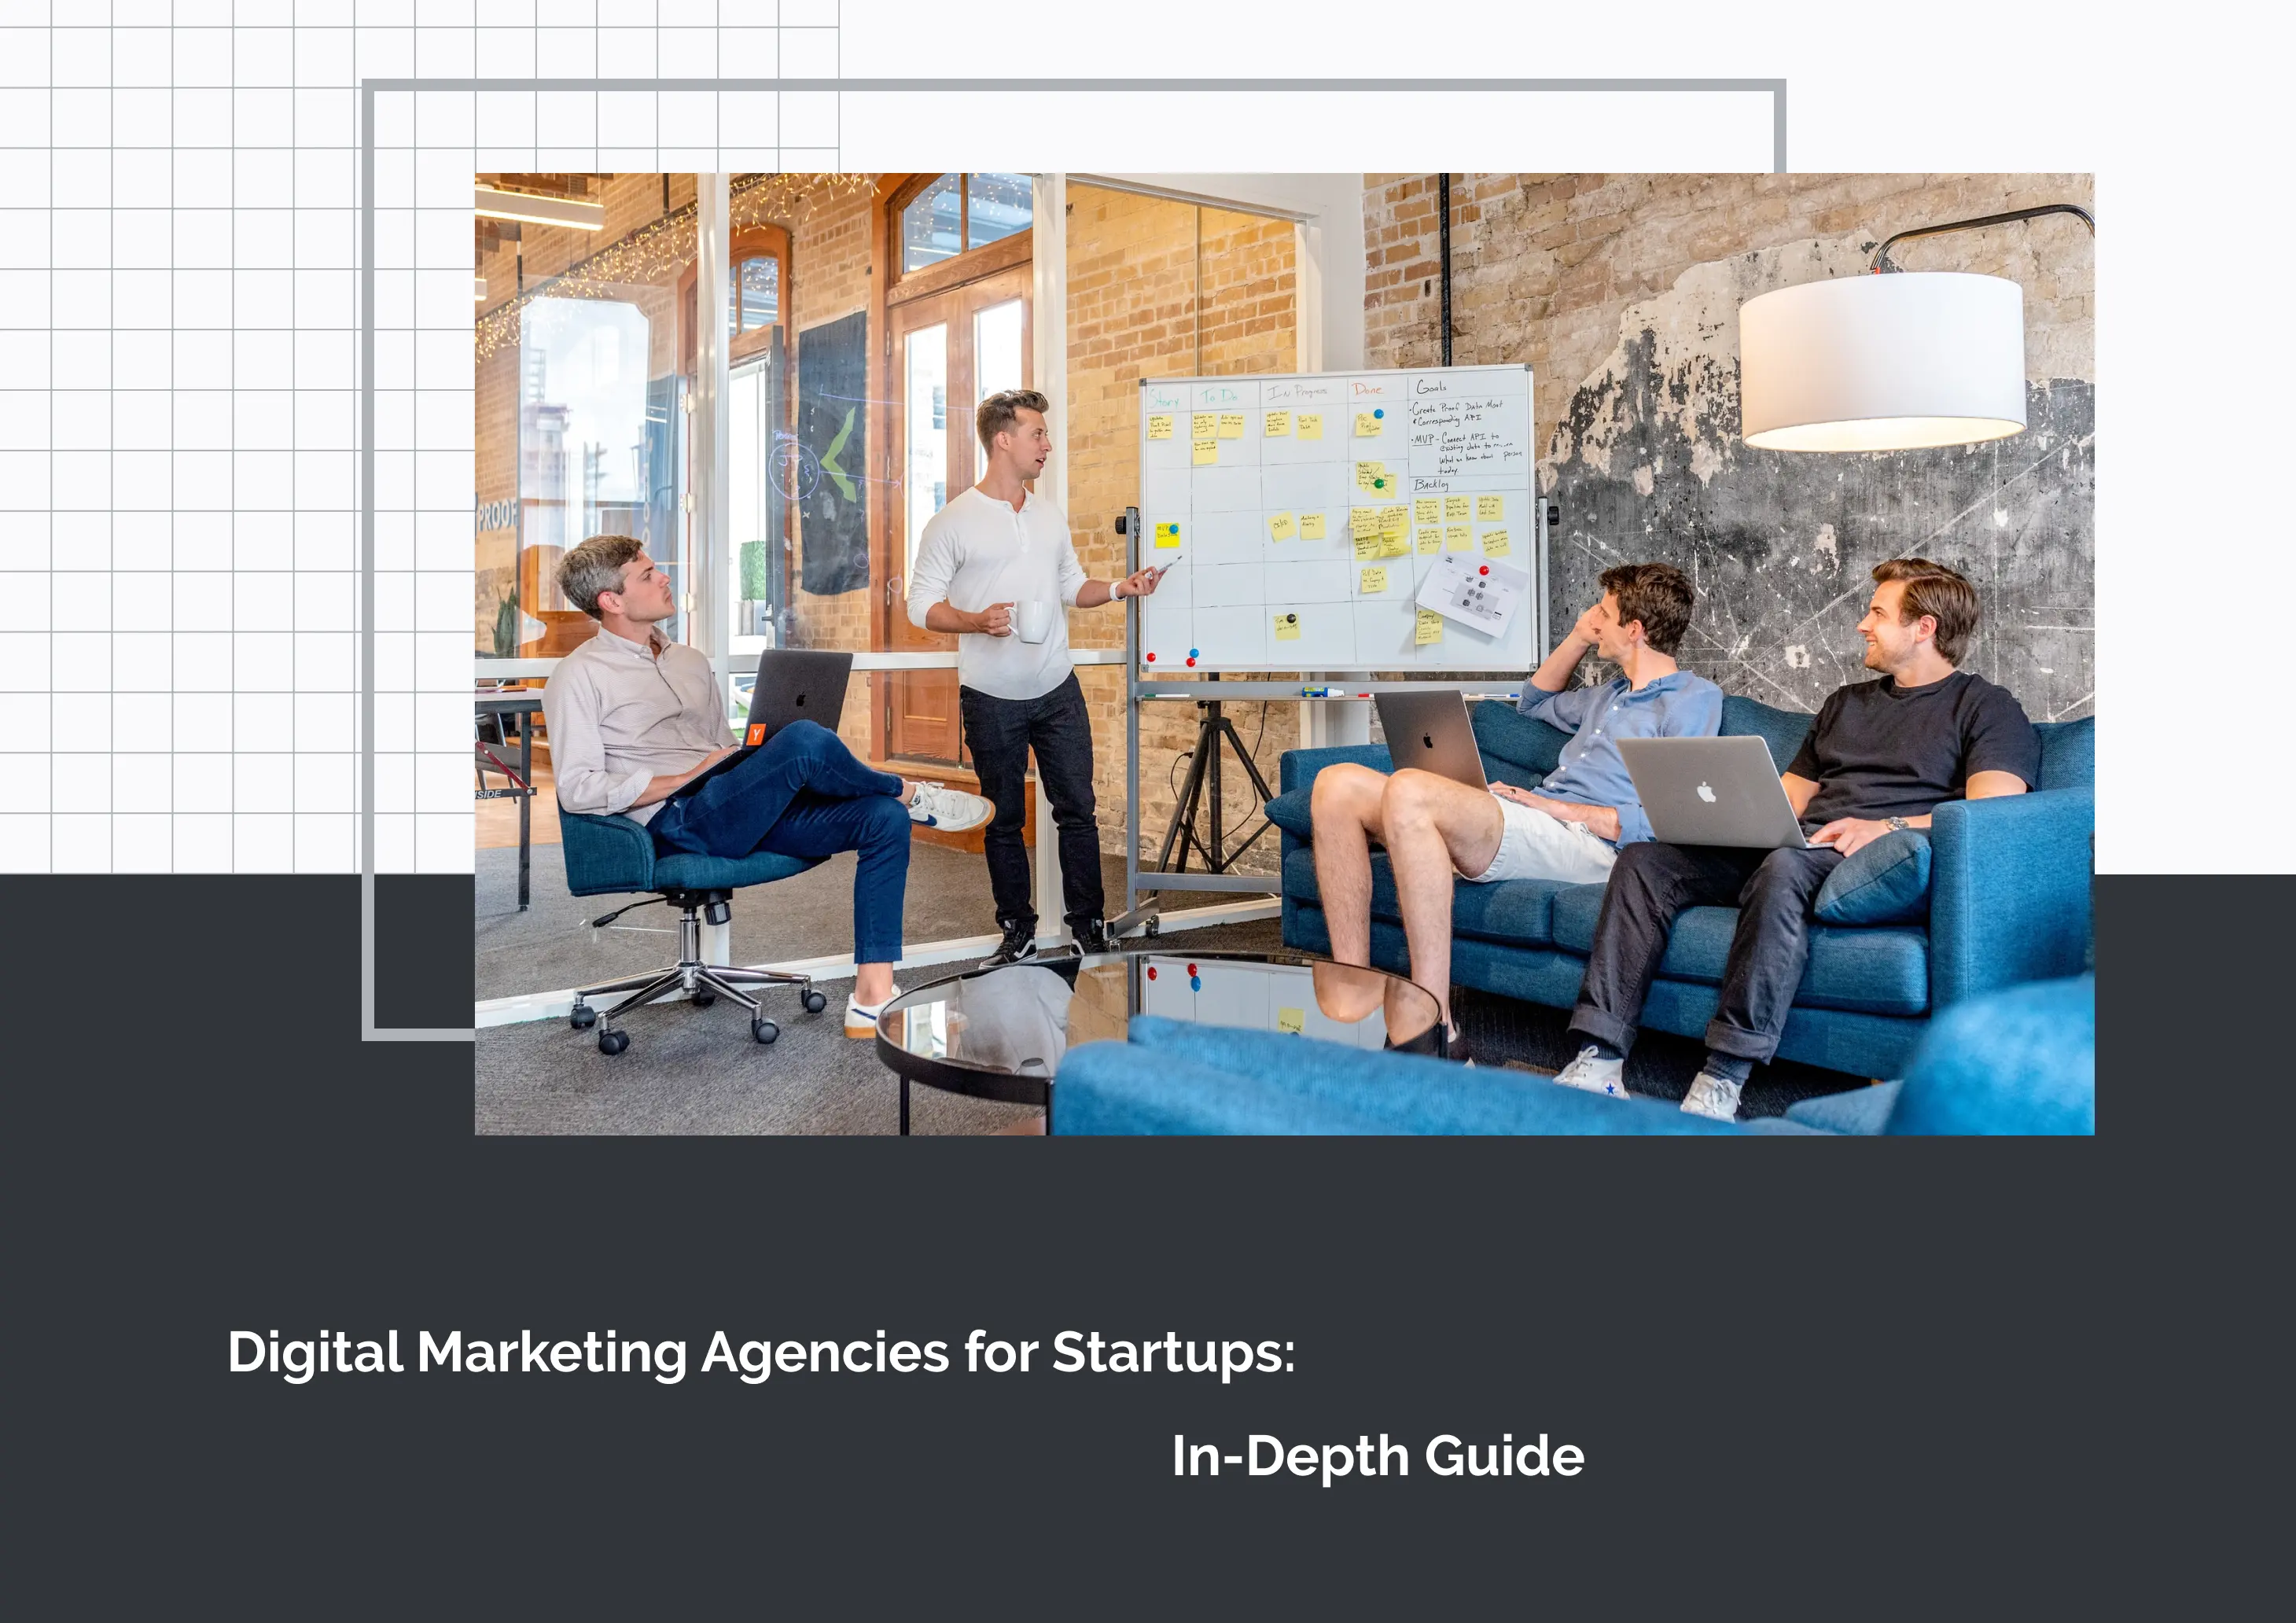 Digital Marketing Agencies for Startups: In-Depth Guide